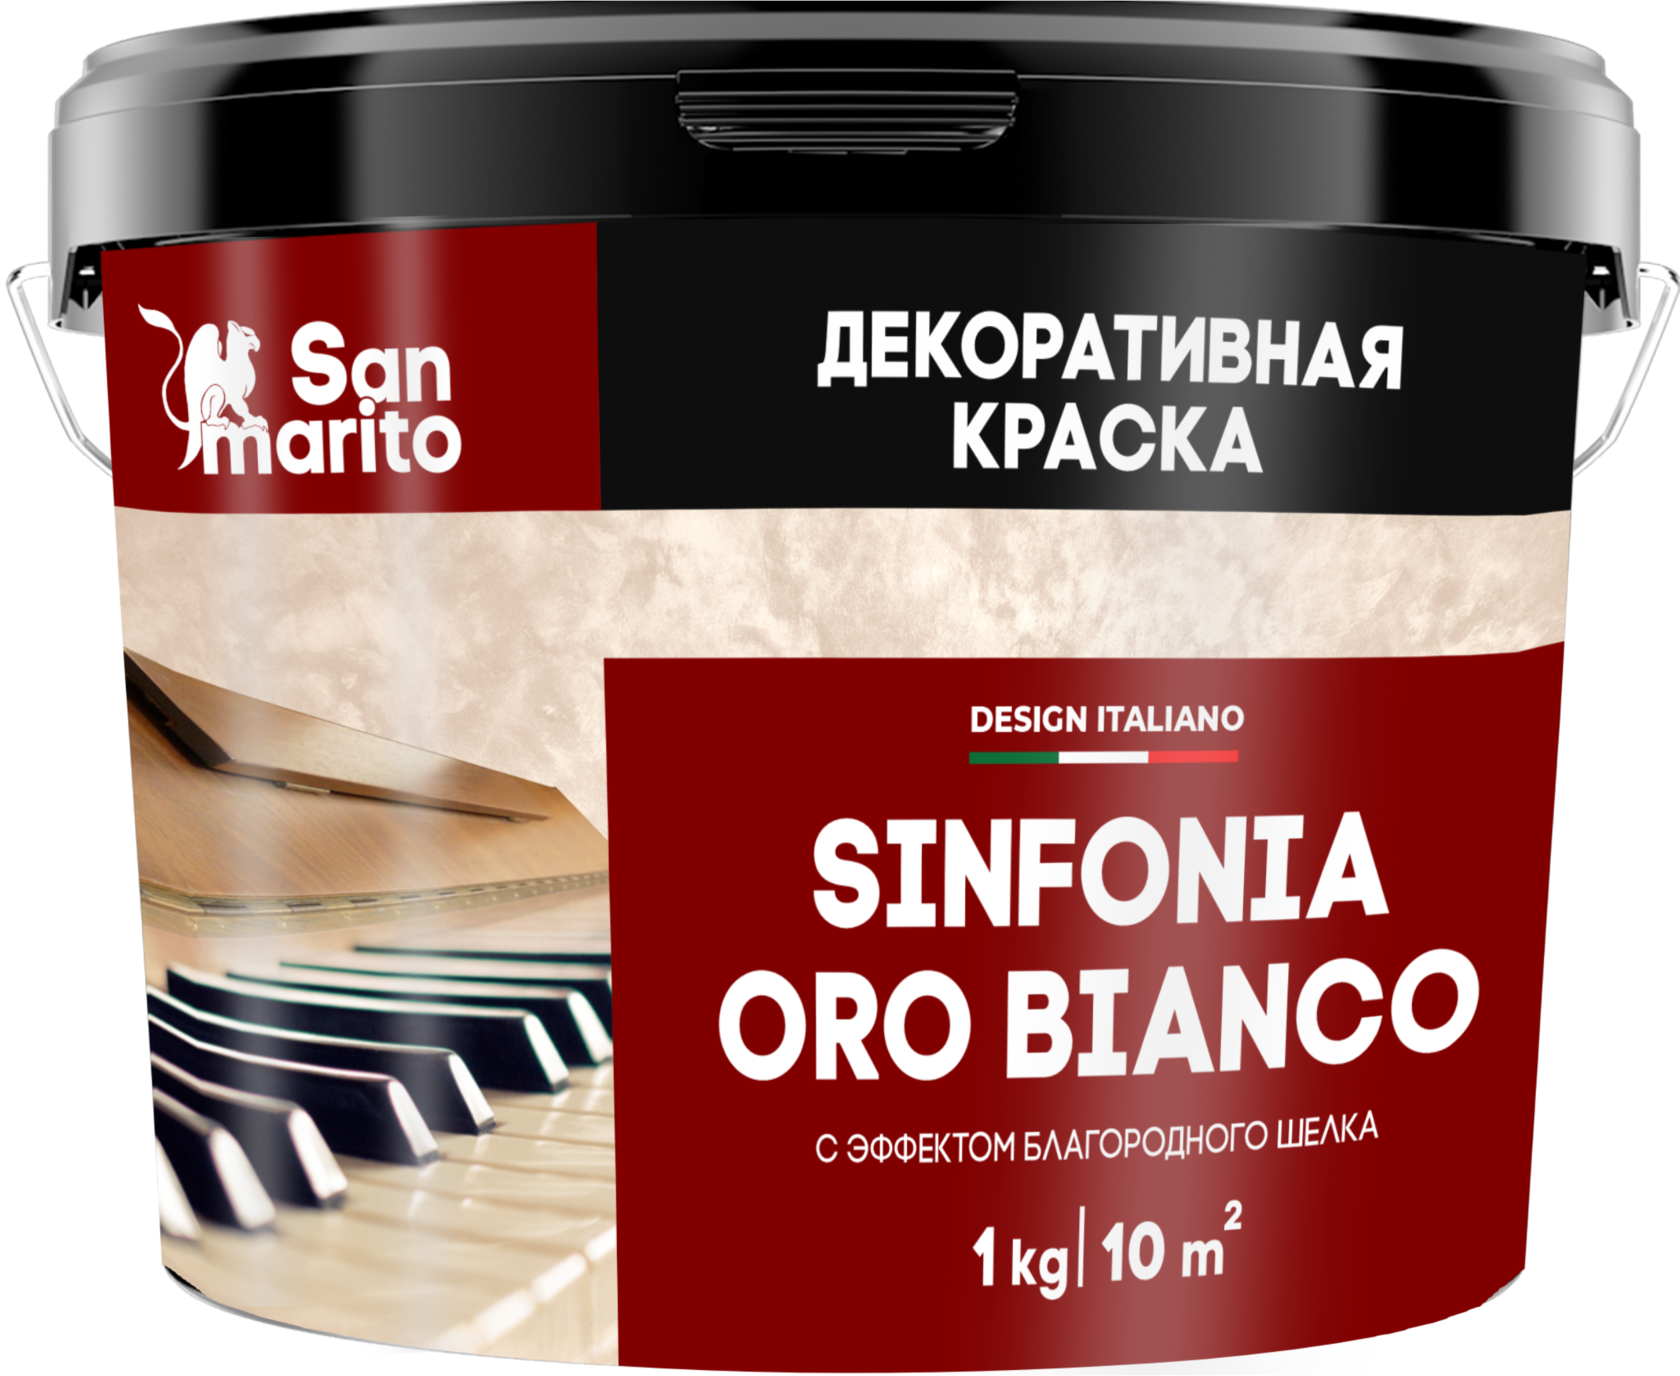 Краска декоративная с эффектом благородного шелка "San Marito Sinfonia Oro Bianco" 1 кг